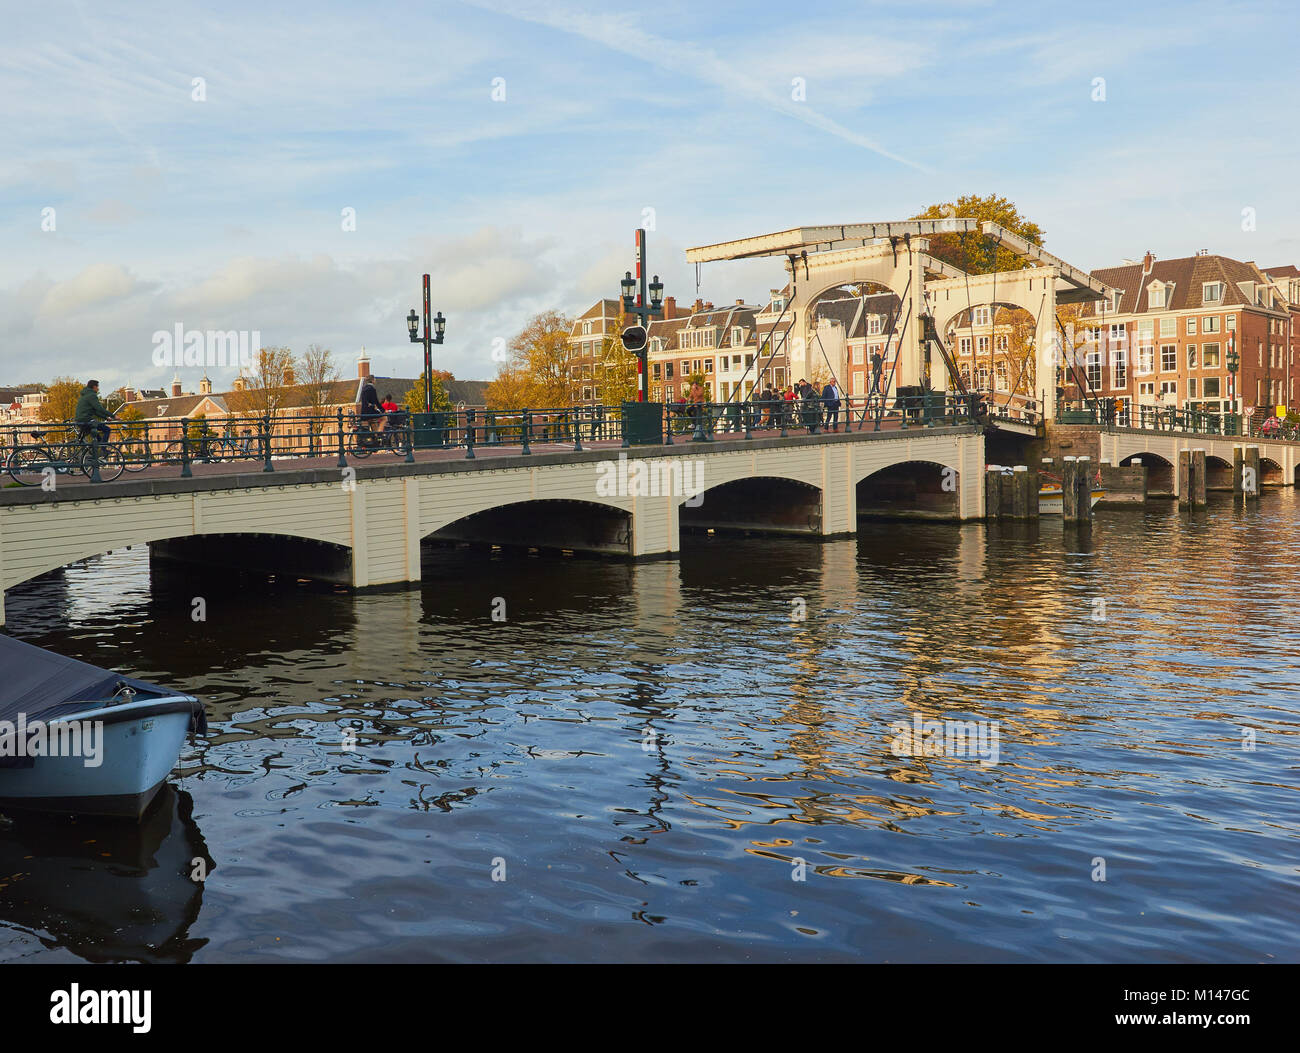 Magere Brug (skinny bridge) a pedestrian bicycle bascule bridge across the Amstel river, Amsterdam, Netherlands Stock Photo